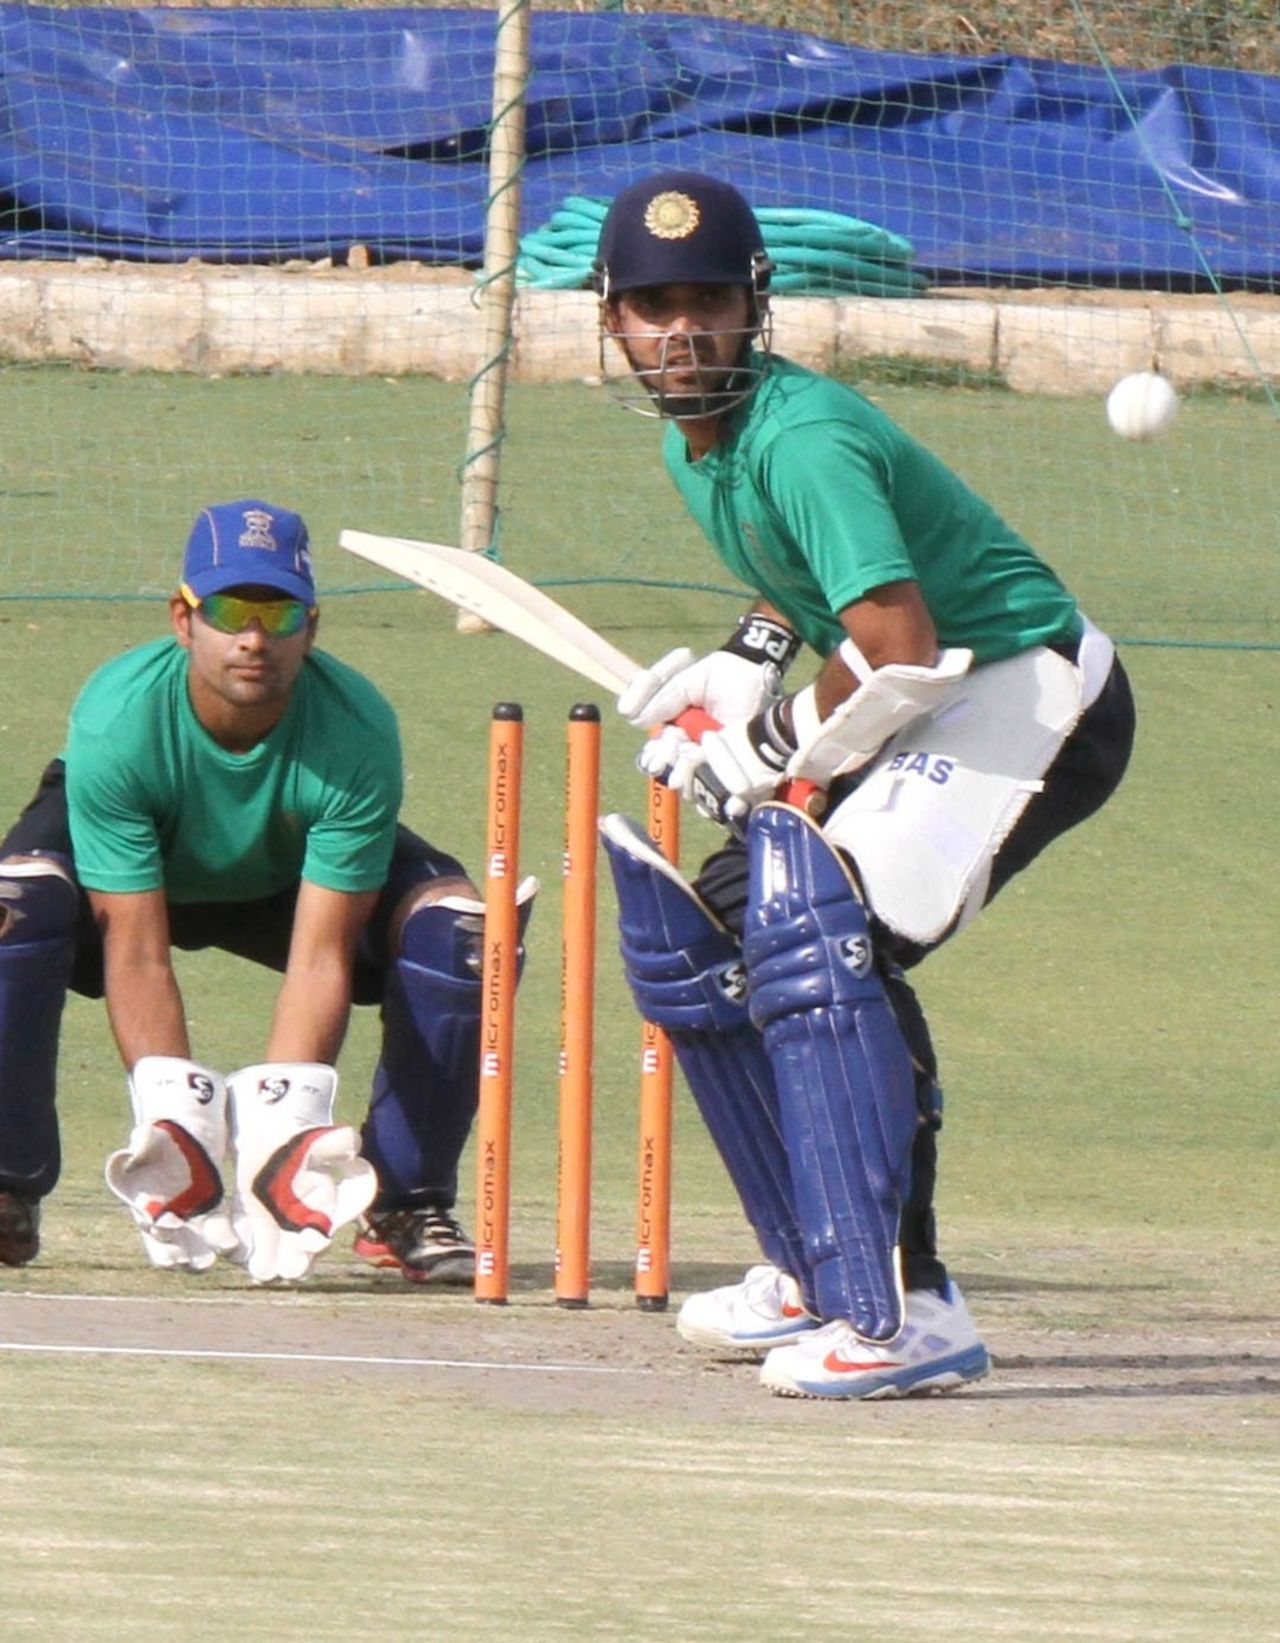 Ajinkya Rahane prepares to play a shot during a practice session at the Sawai Mansingh Stadium in Jaipur